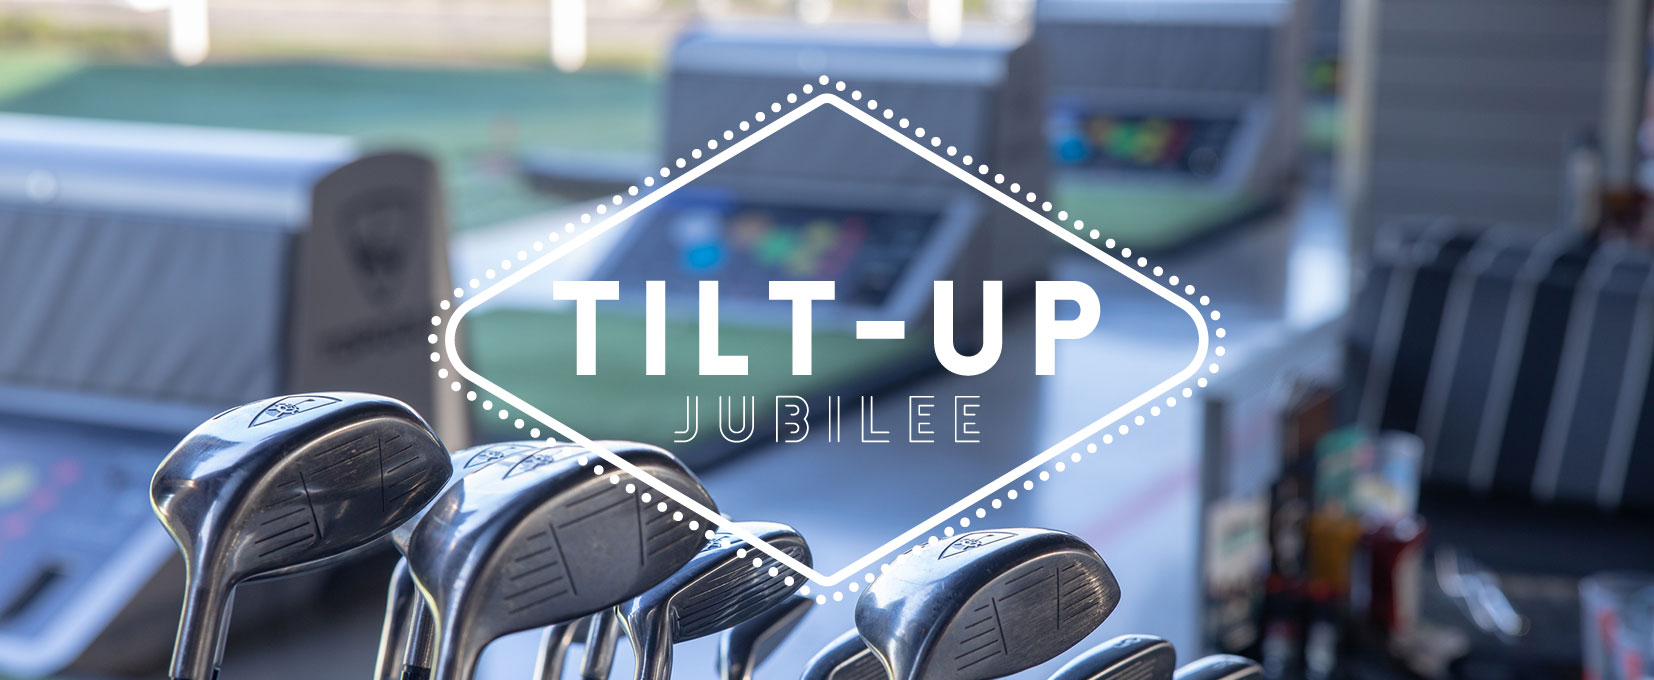 Tilt-Up Jubilee at Topgolf - 2021